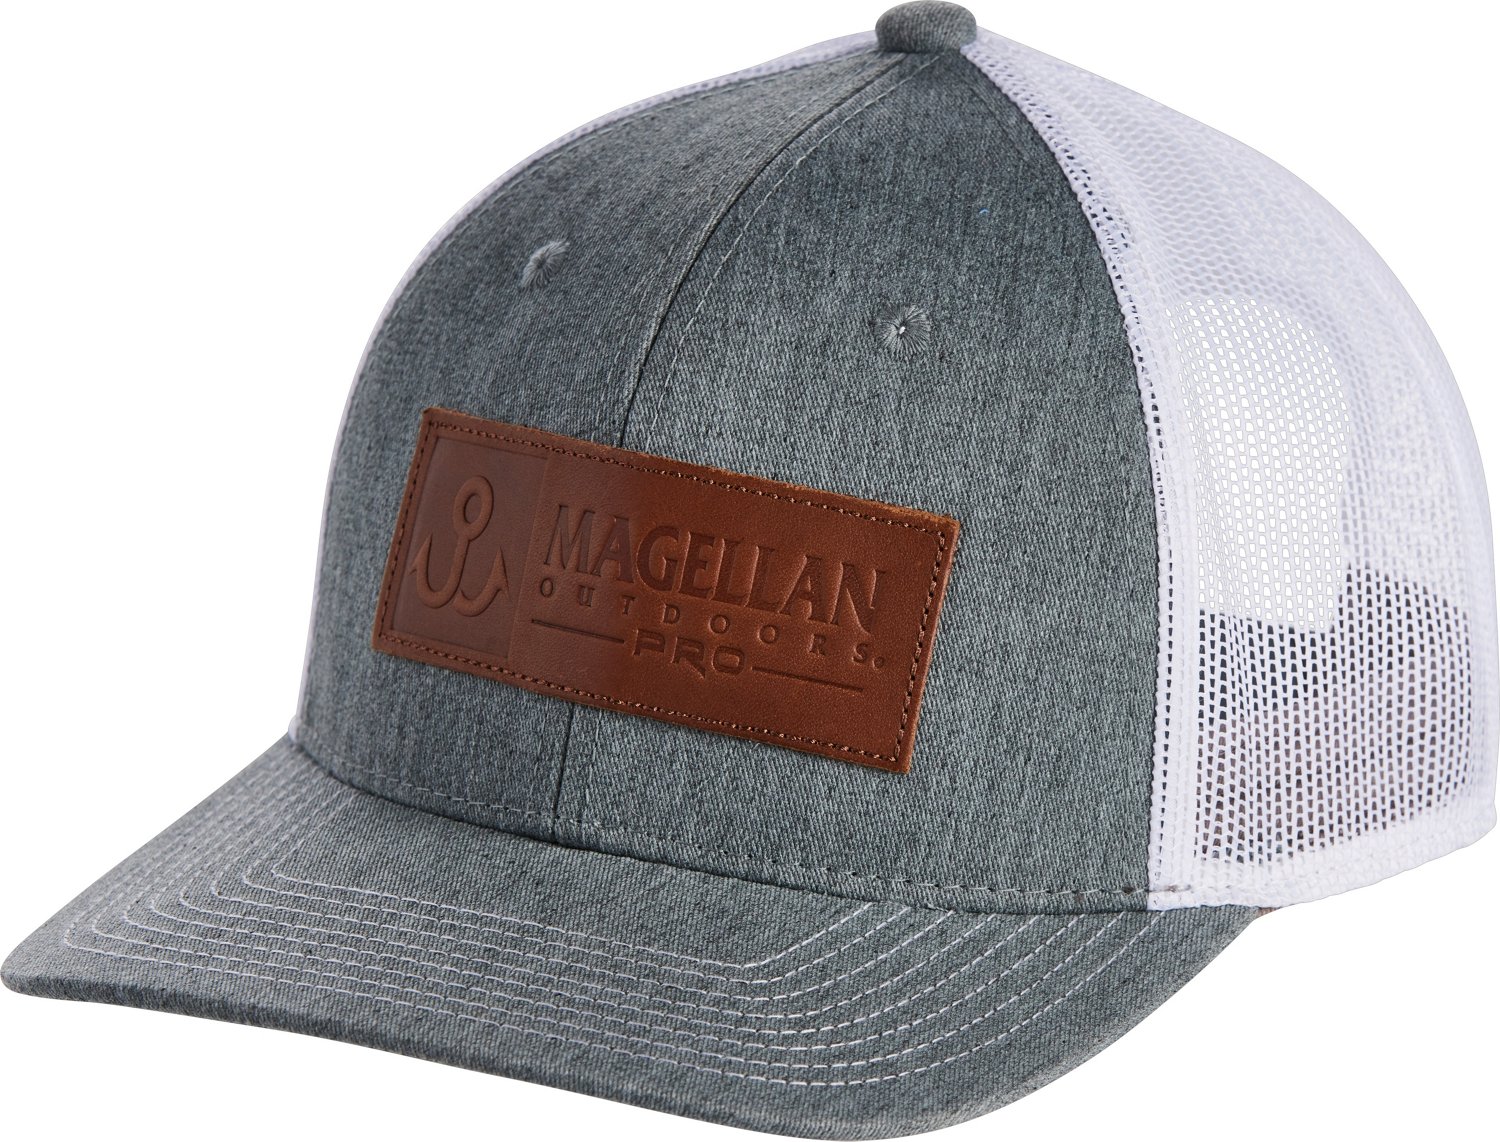 Magellan Outdoors Men's Pro Angler Jacob Wheeler Solid Cap